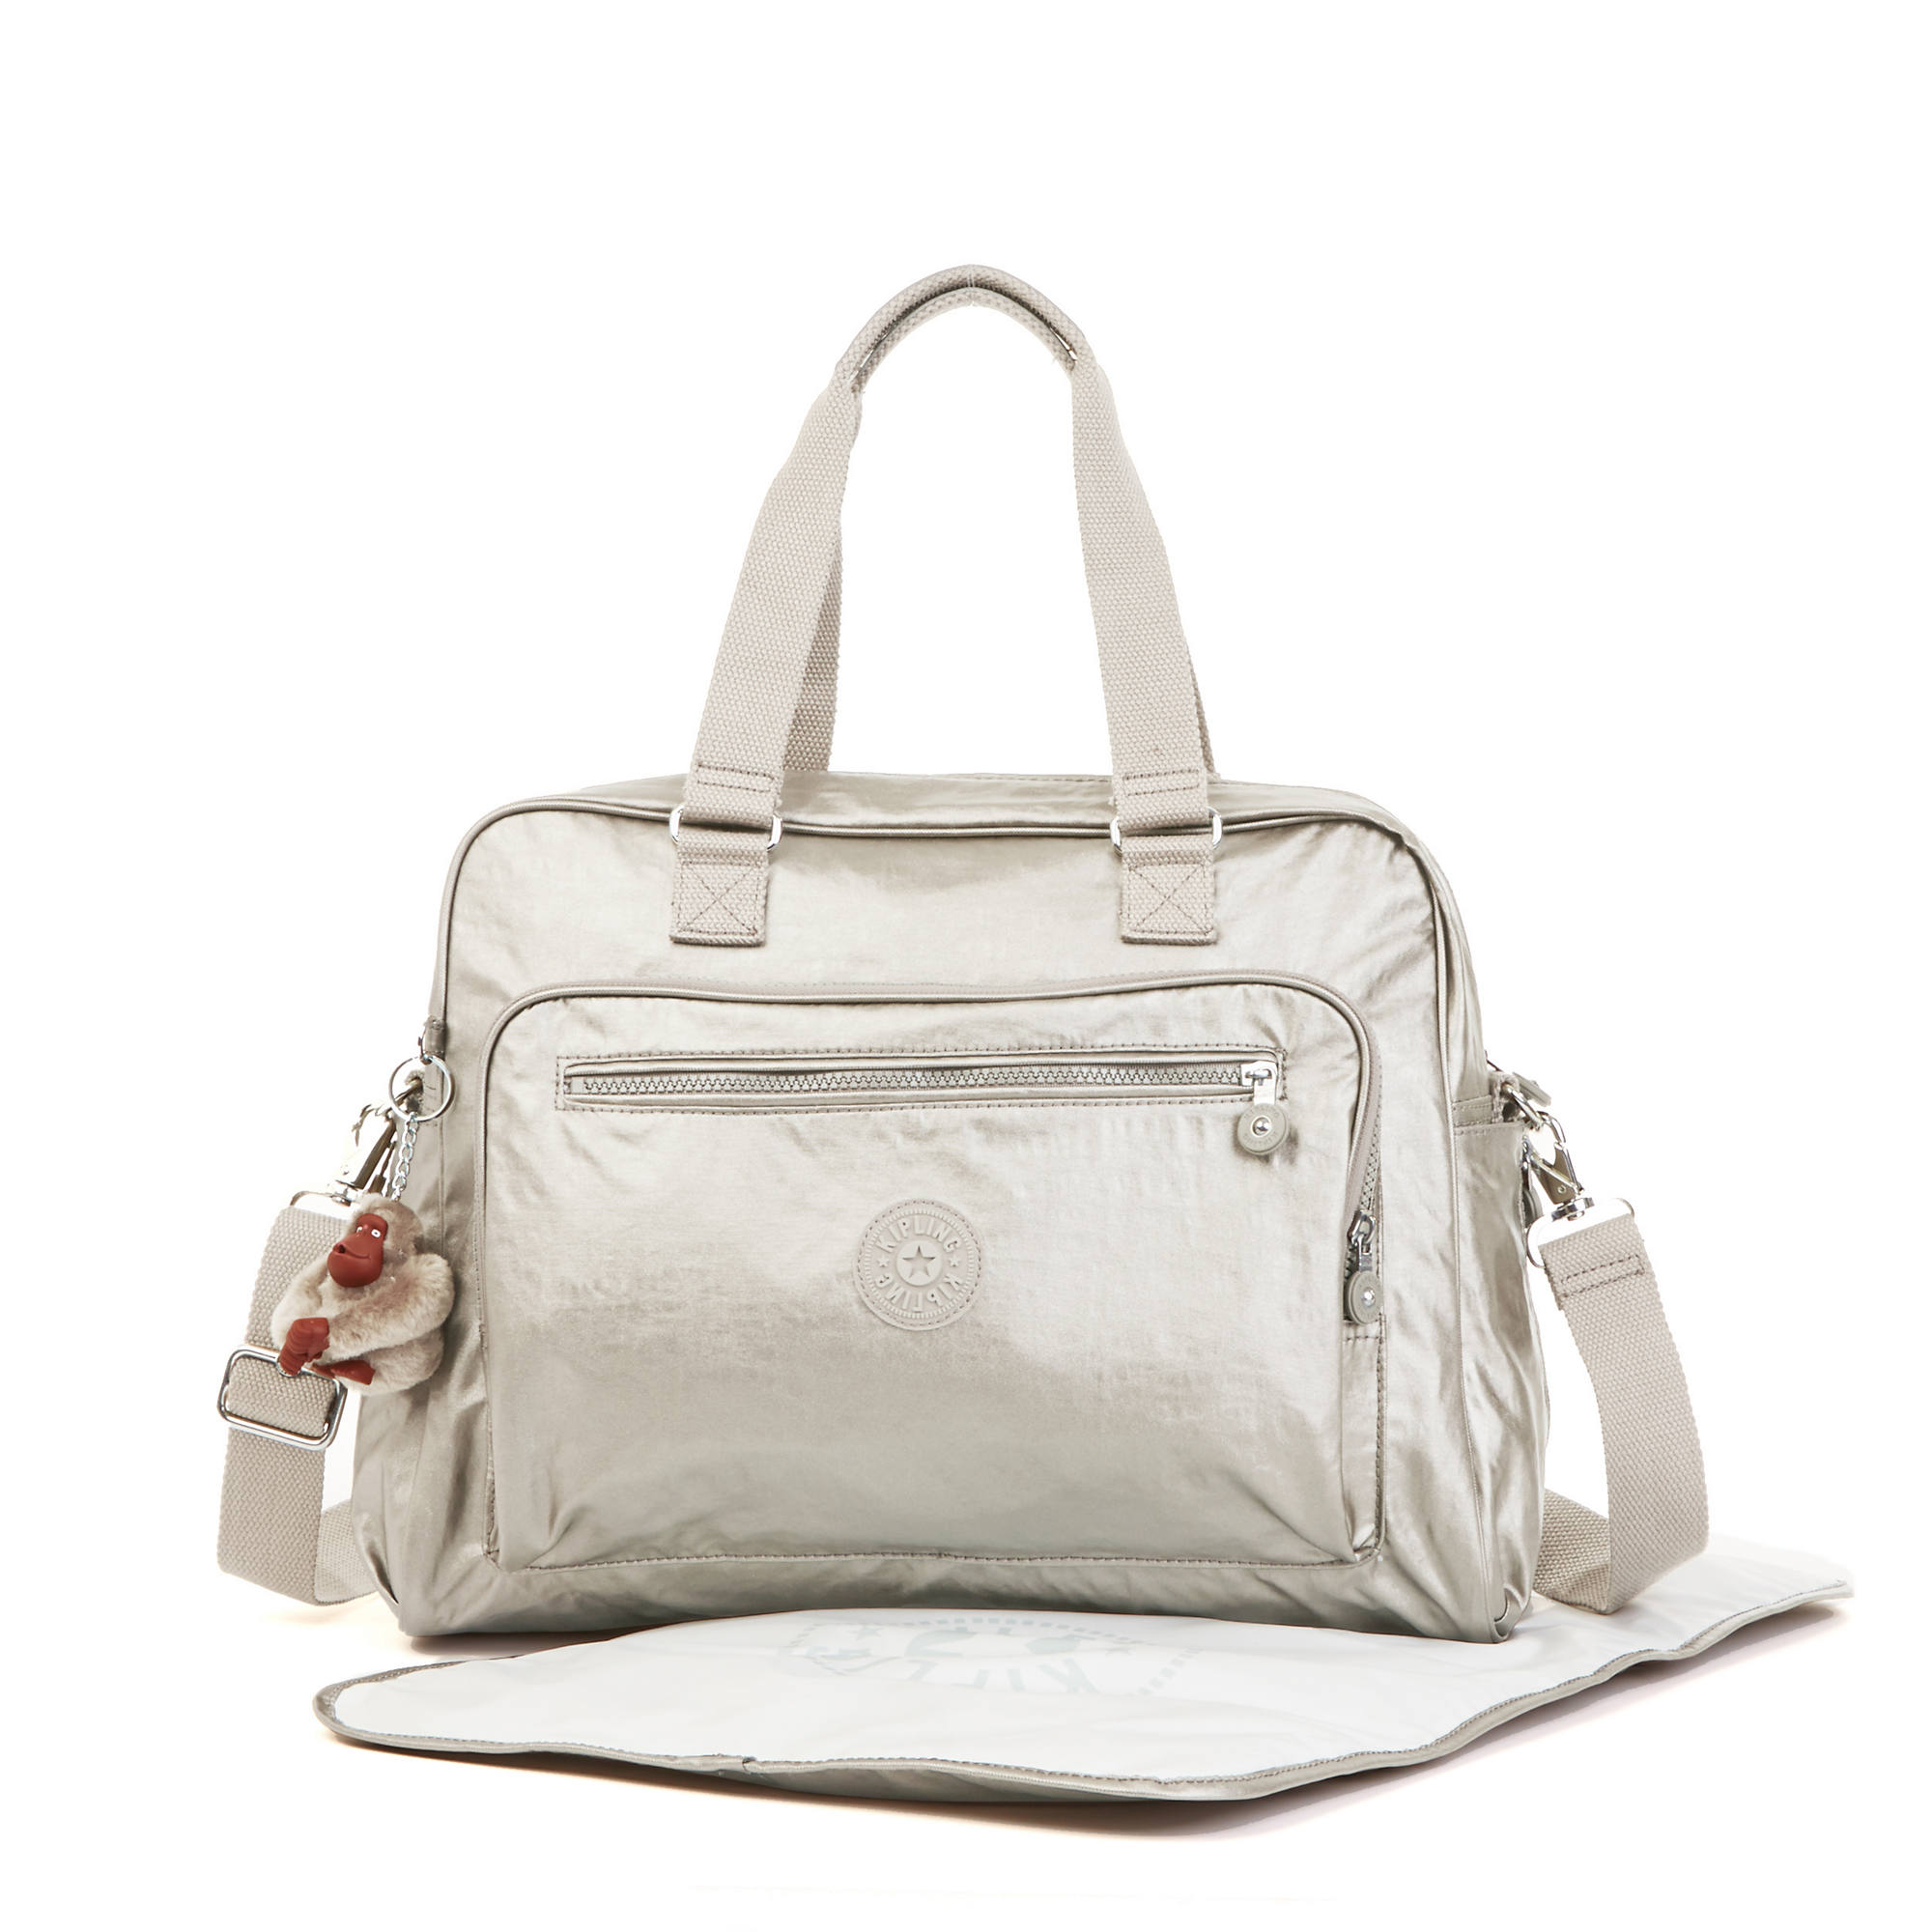 Kipling Alanna Metallic Diaper Bag | eBay